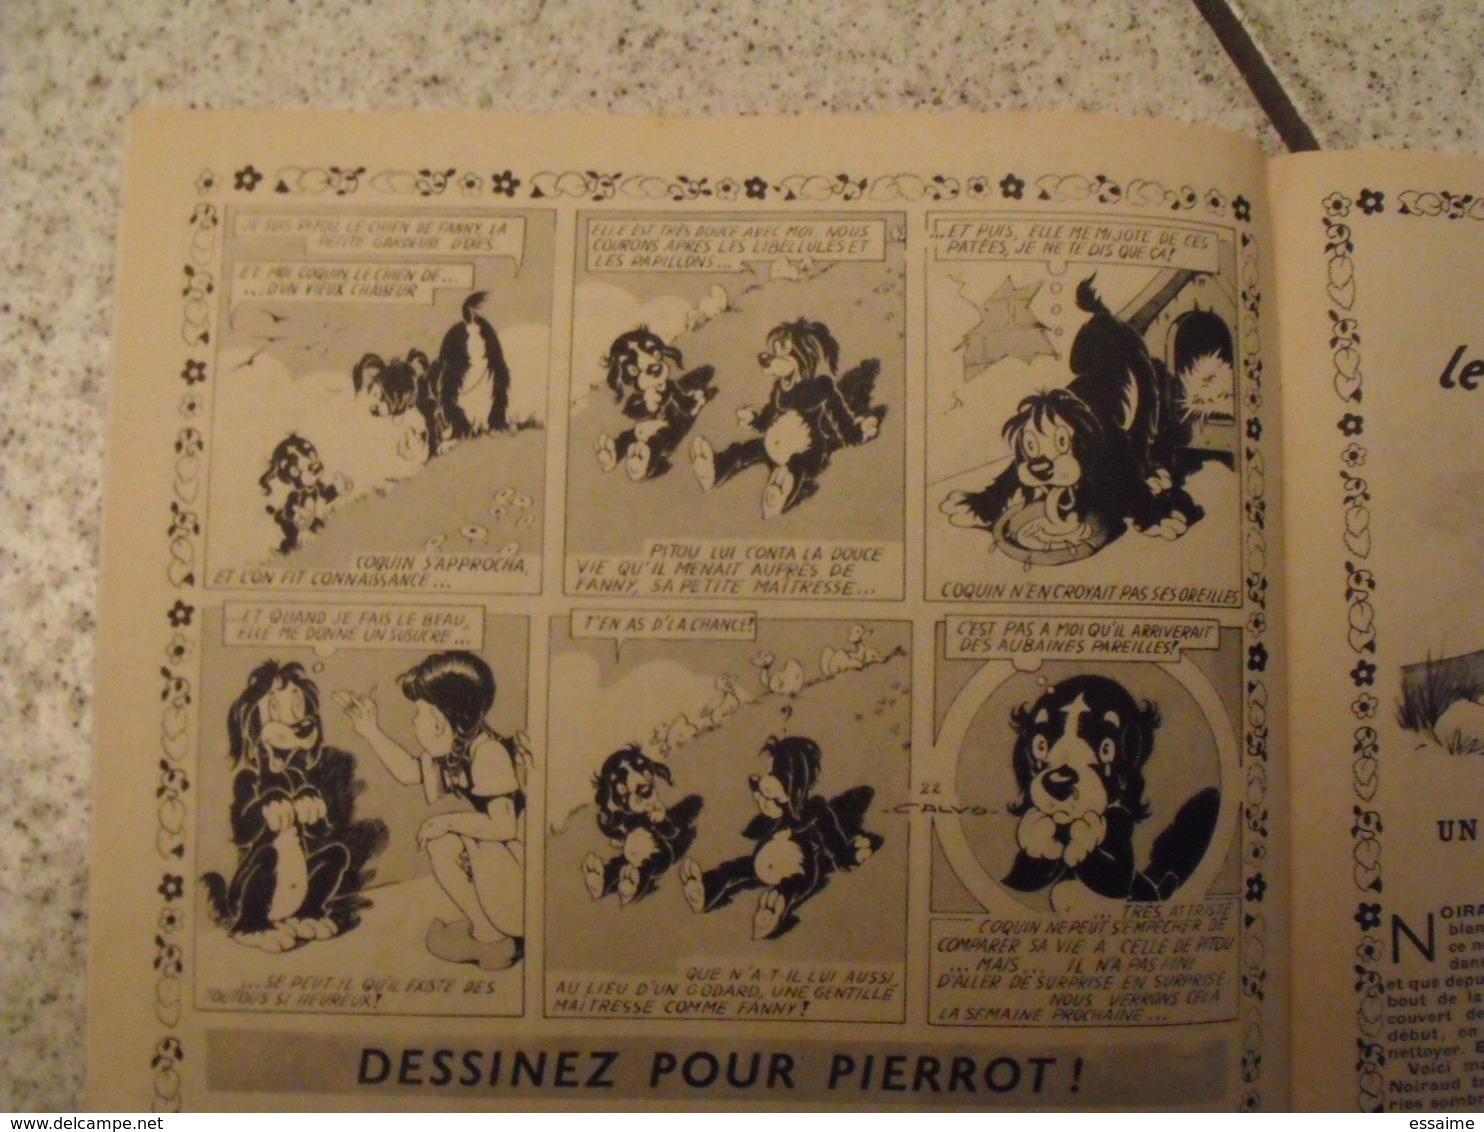 Pierrot. 28 n° de 1953-55. Calvo cricri coquin Pellos Petipon jac remise marin flèche d'or trubert. BD à redécouvrir